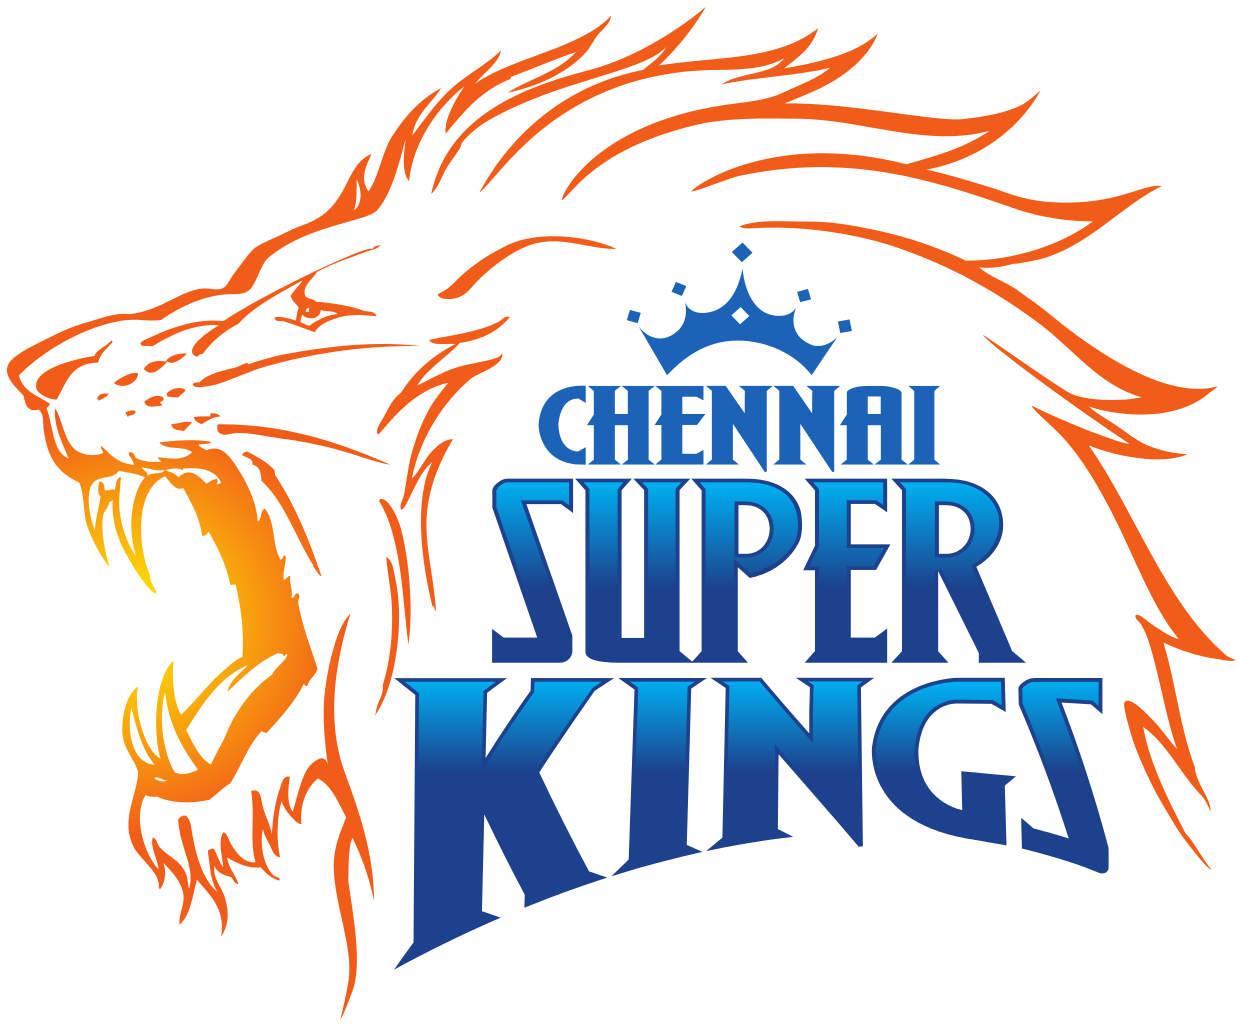 About Chennai Super Kings